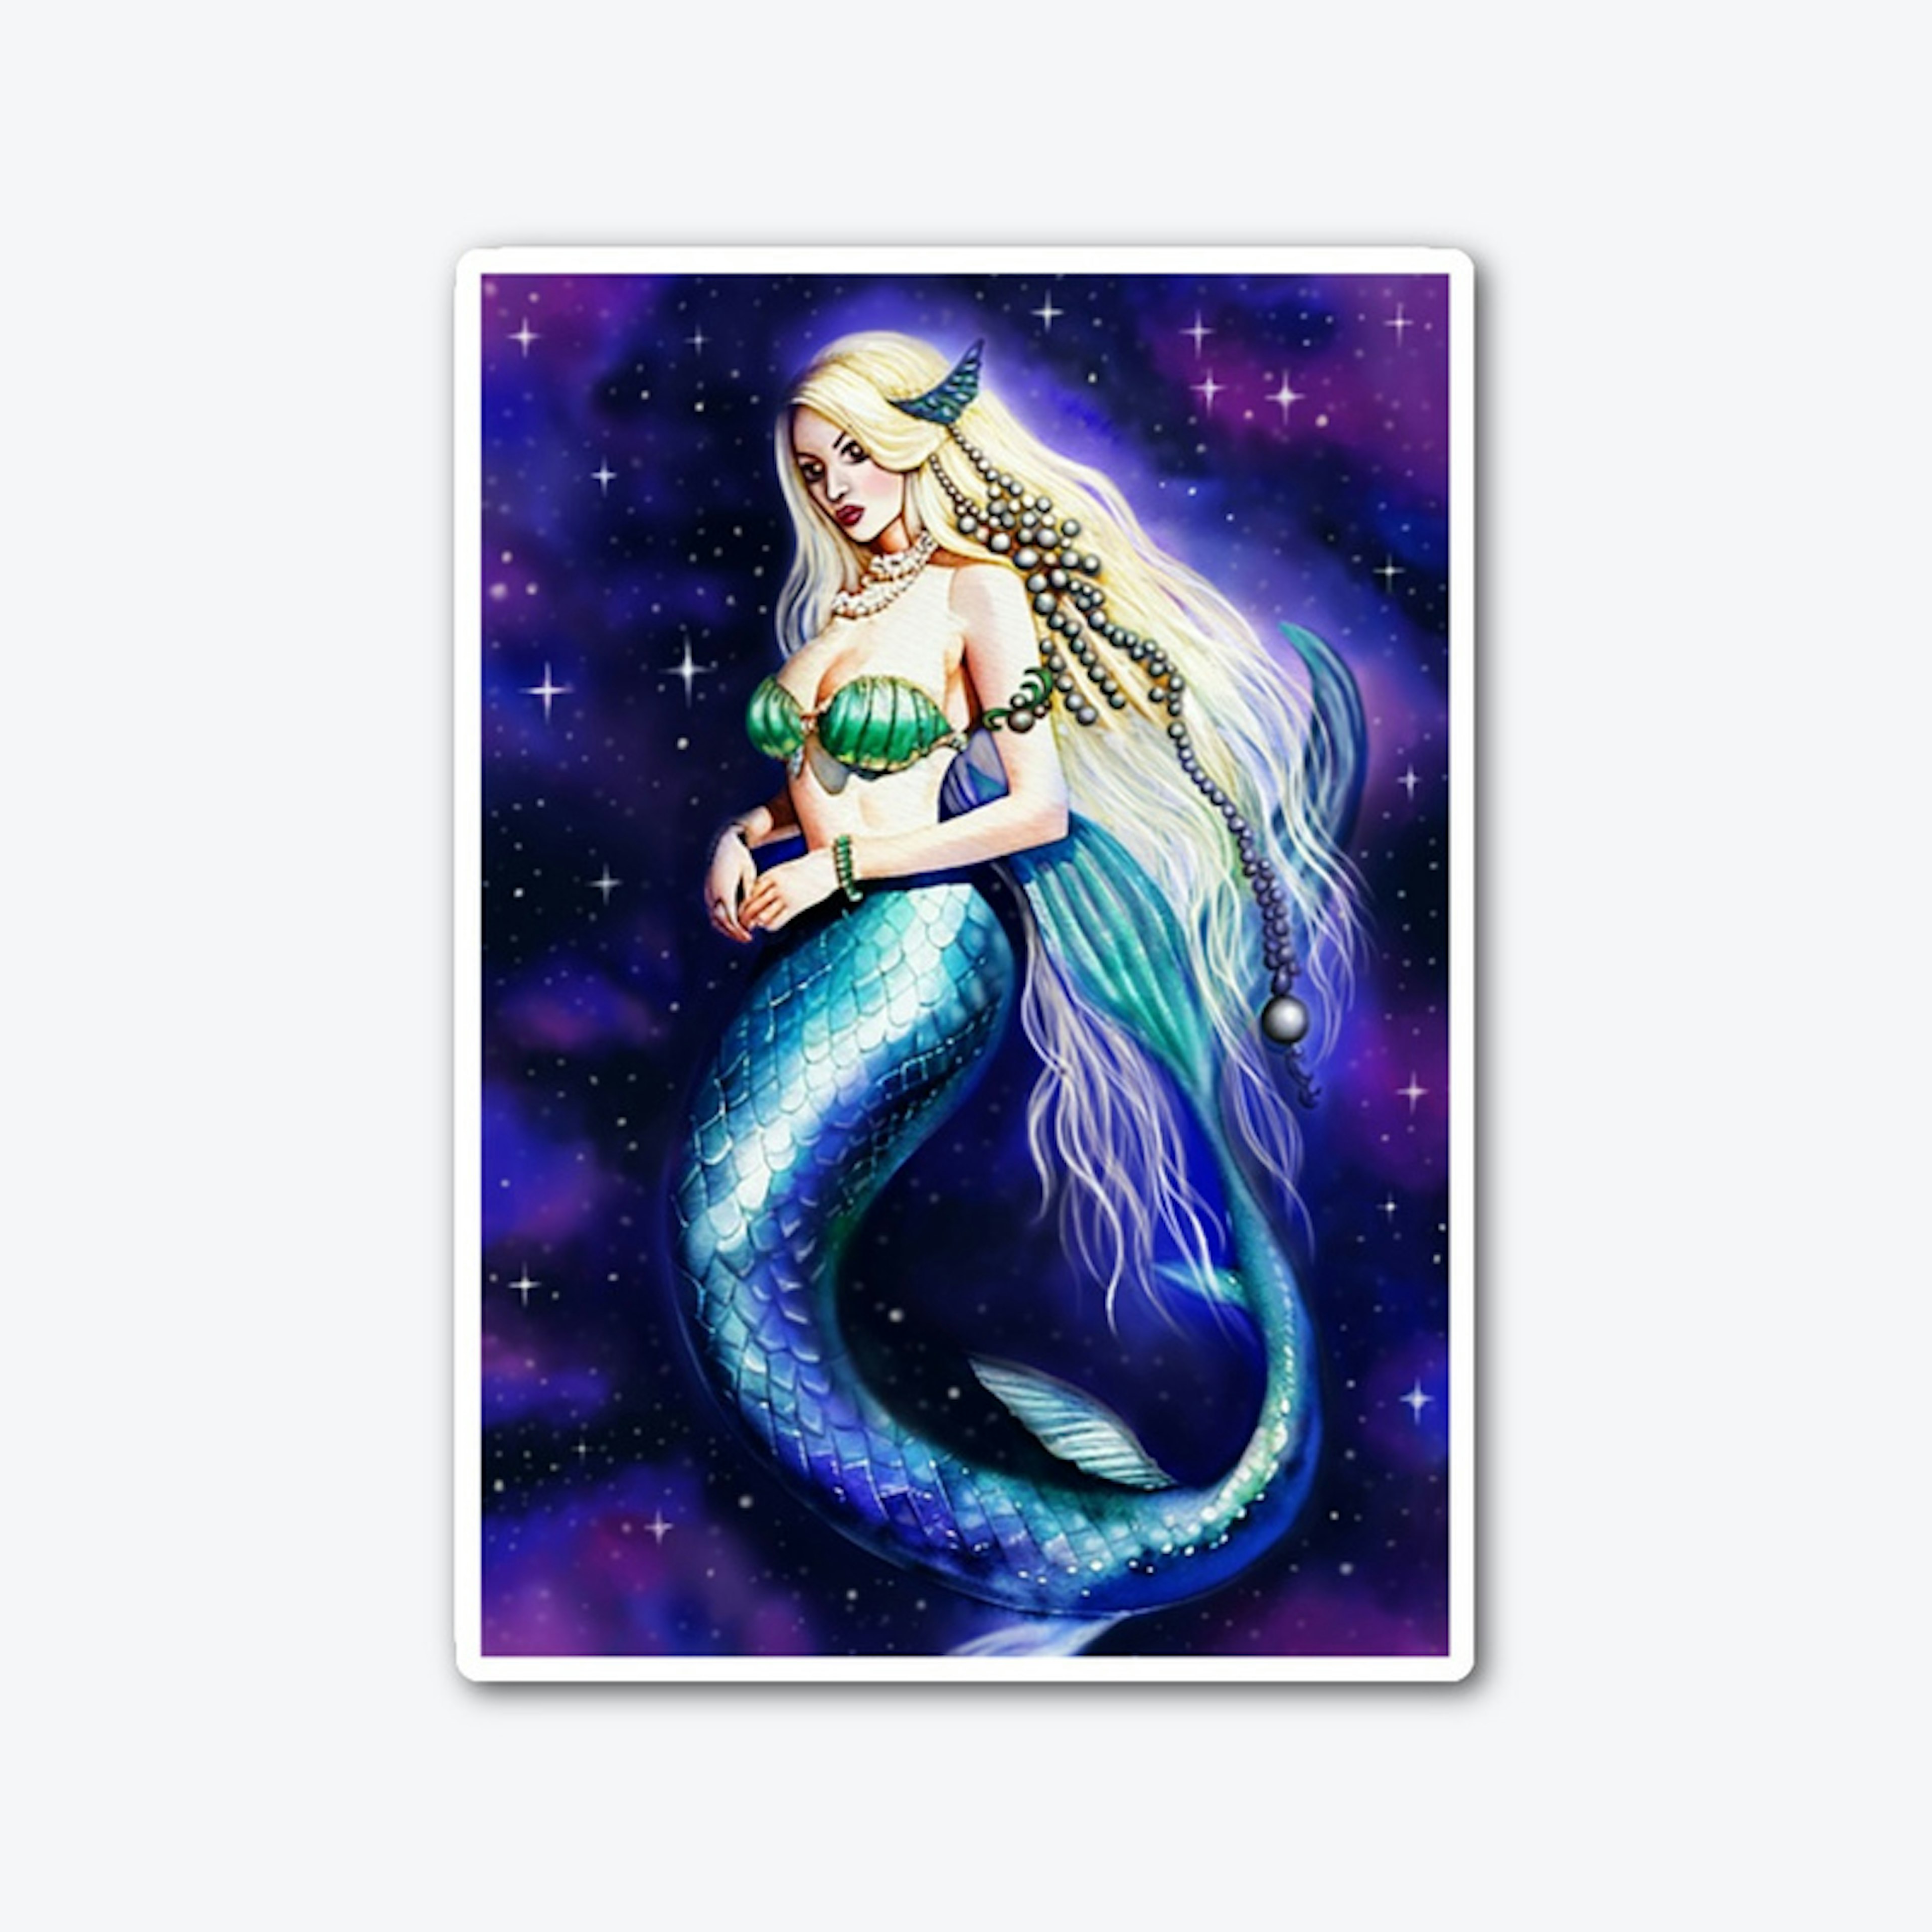 Intergalactic Mermaid | Art of Jameela